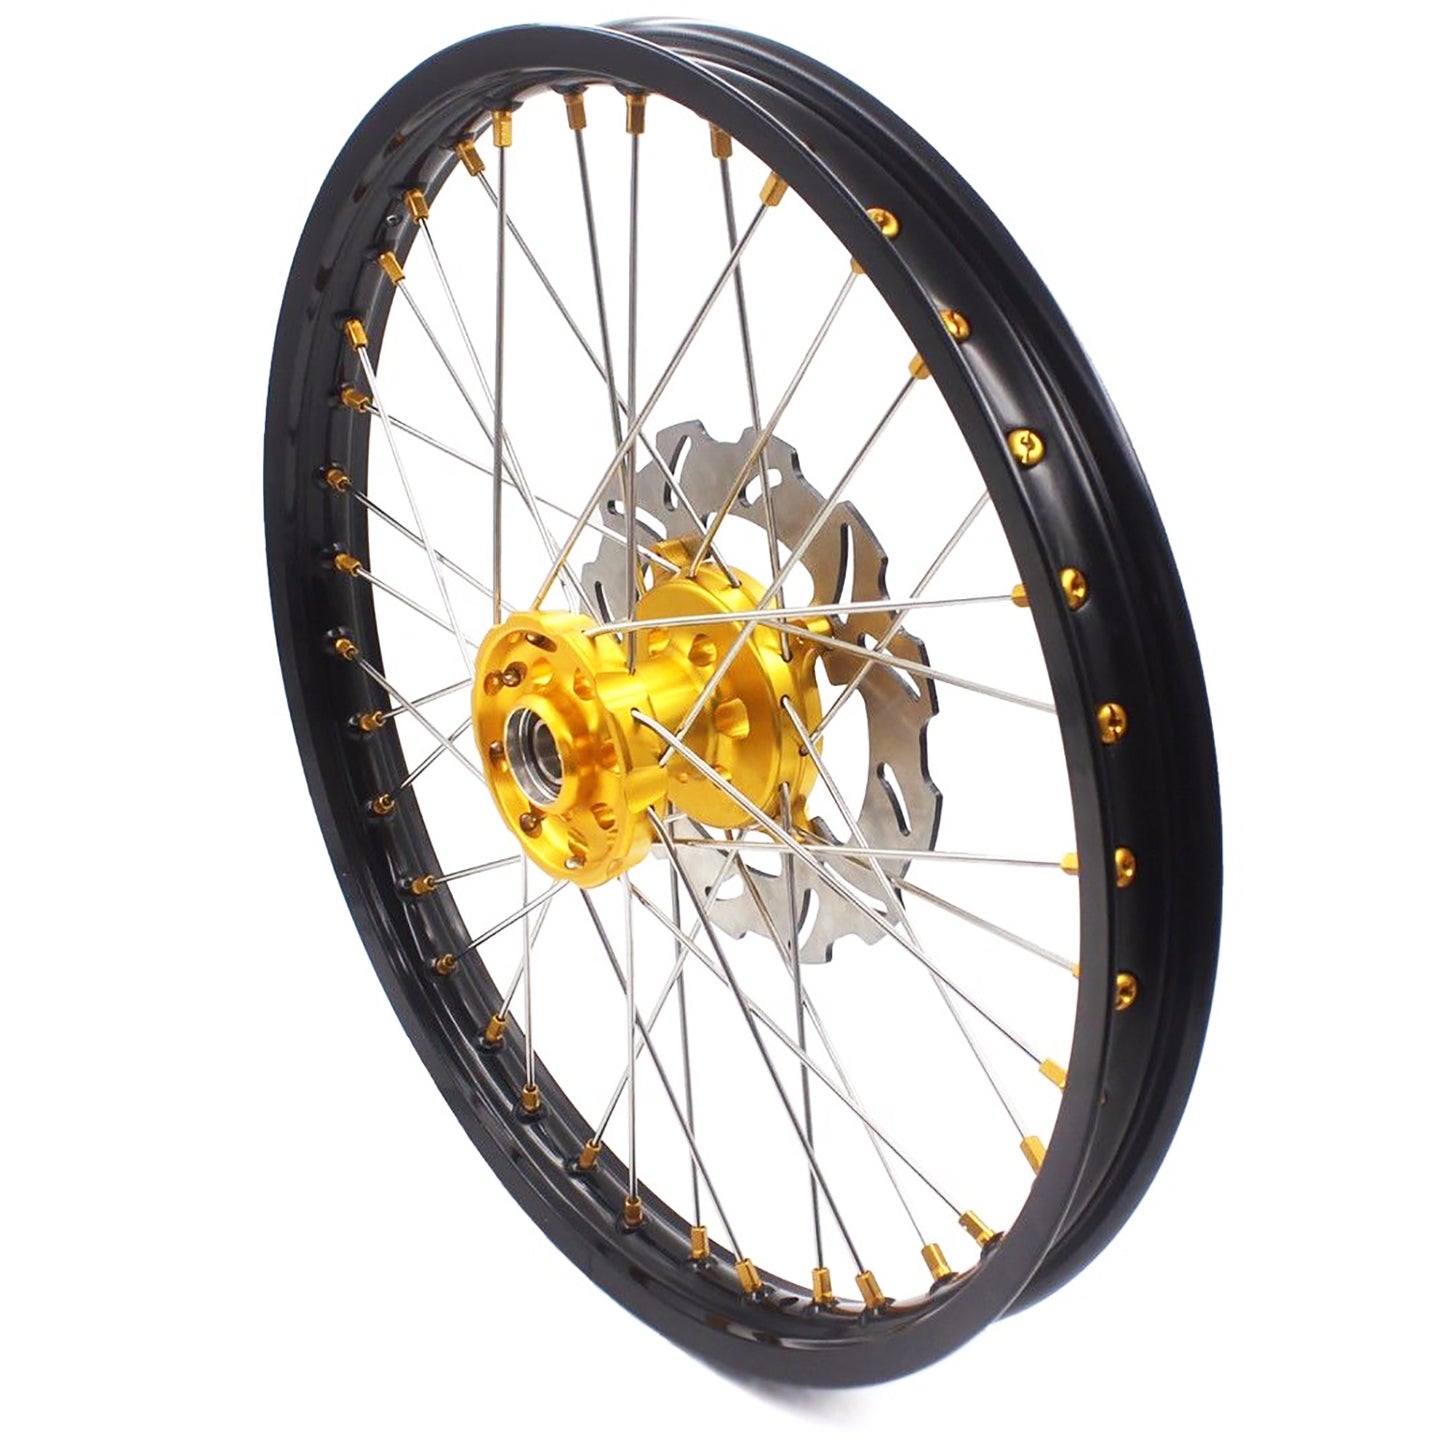 KKE 21 & 19 MX wheels rims set for Suzuki rmz250 07-19 rmz450 05-19 gold nipple silver spoke - KKE Racing